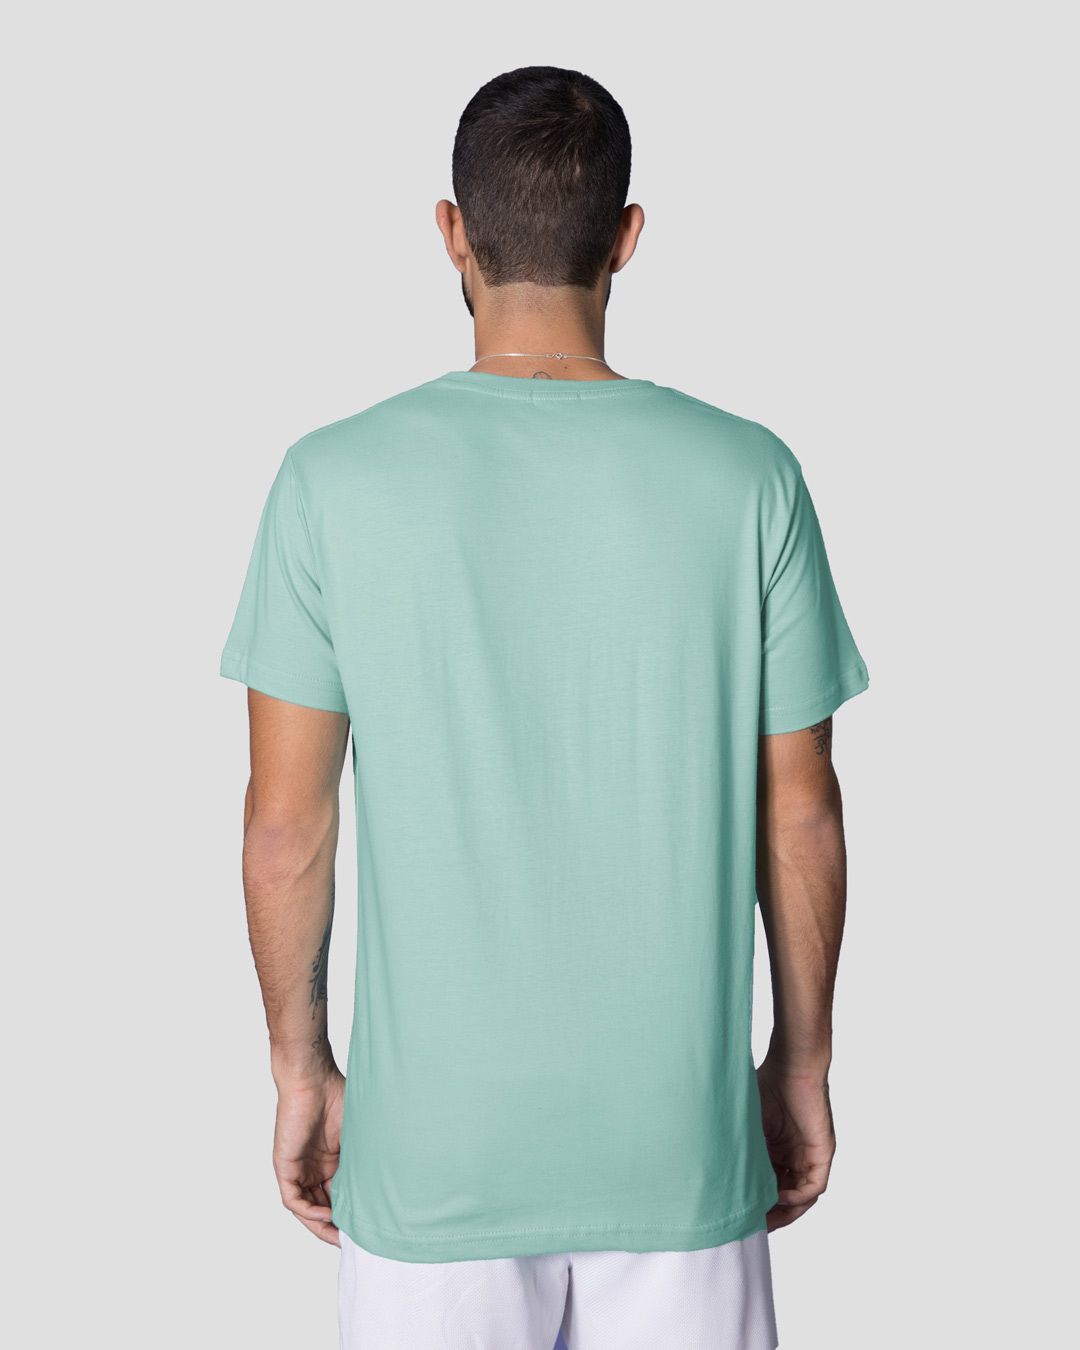 Shop Lazy Mickey Half Sleeve T-Shirt (DL)-Back